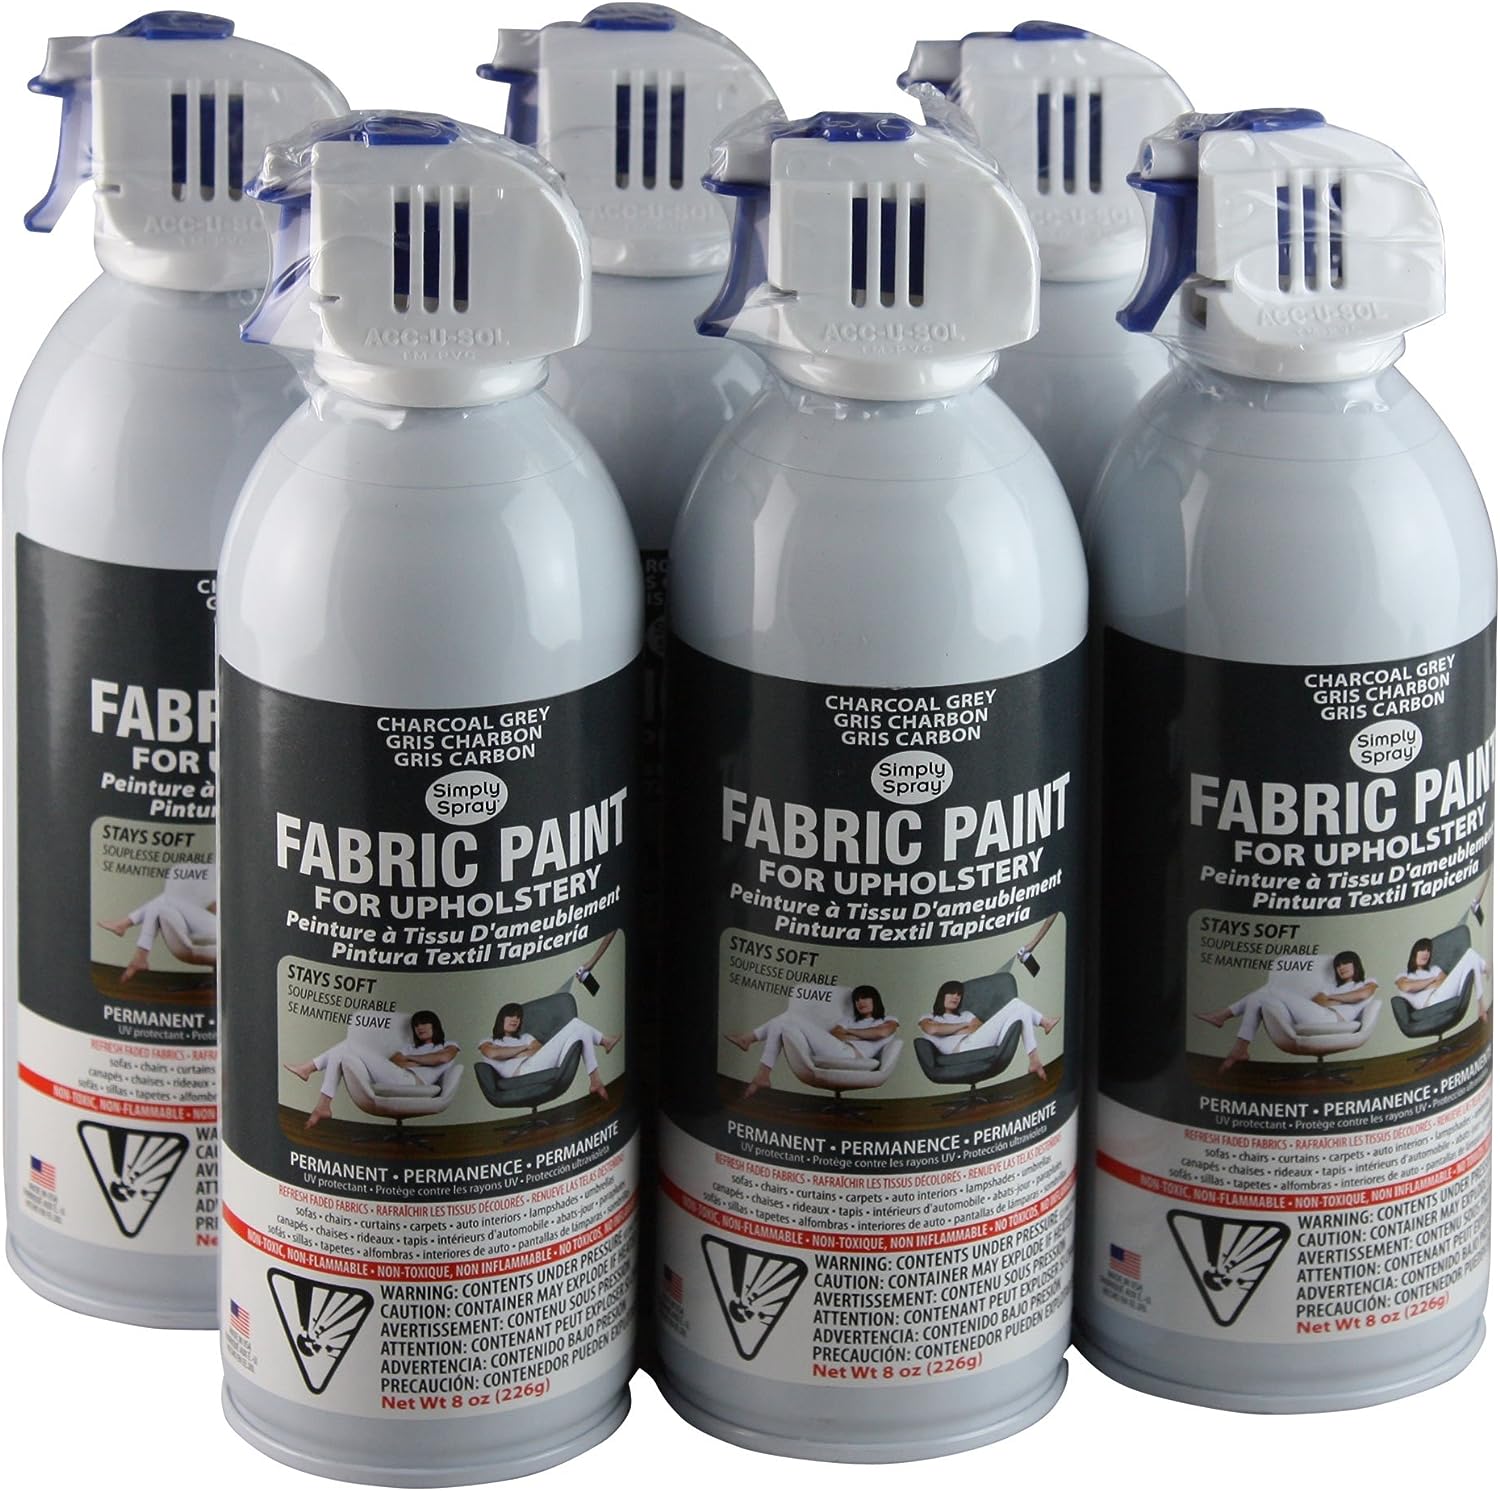 DupliColor Fabric Spray Review 